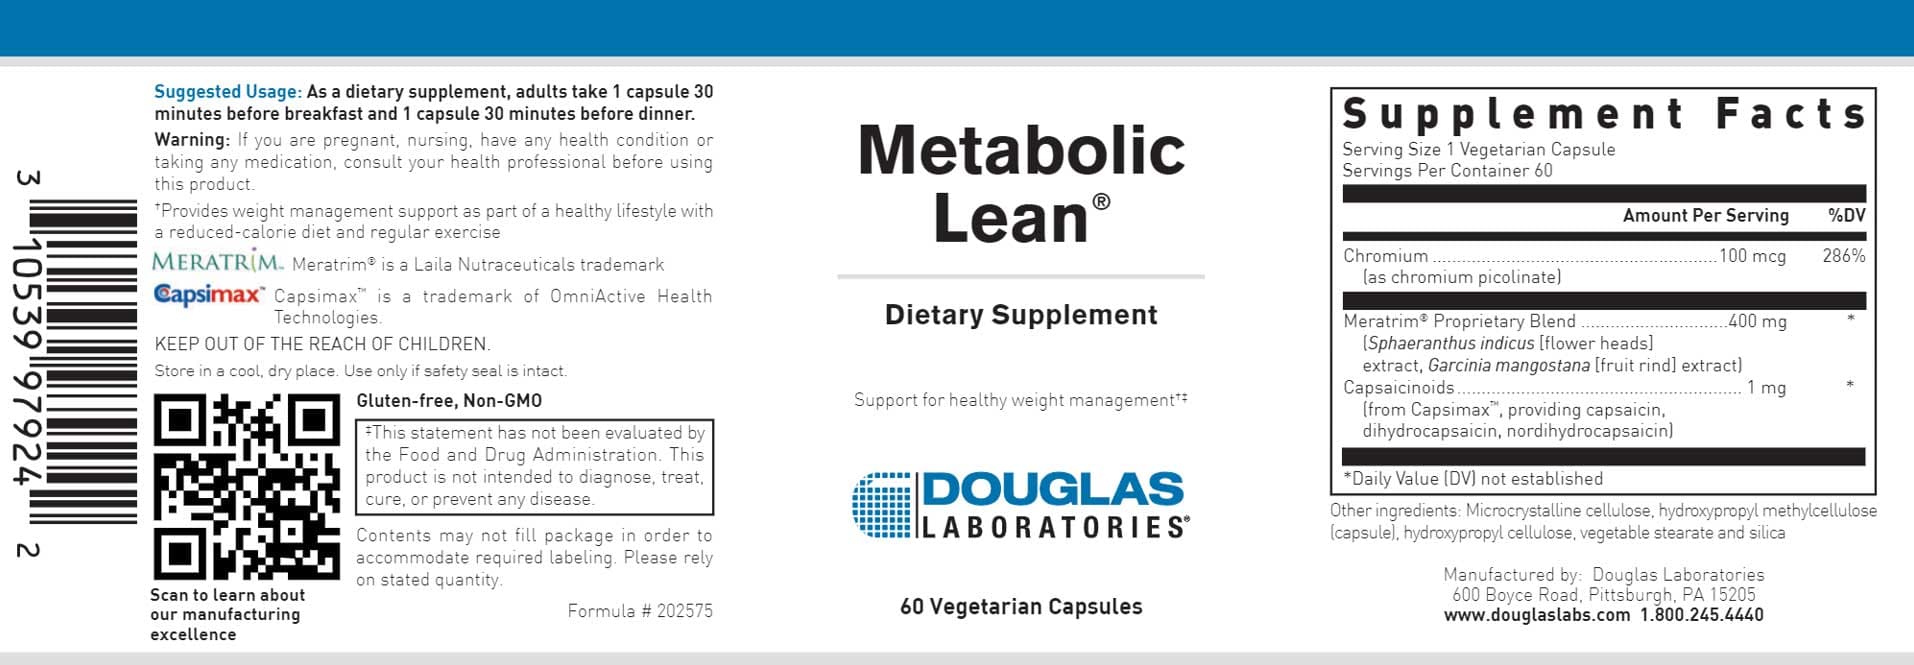 Douglas Laboratories Metabolic Lean Label